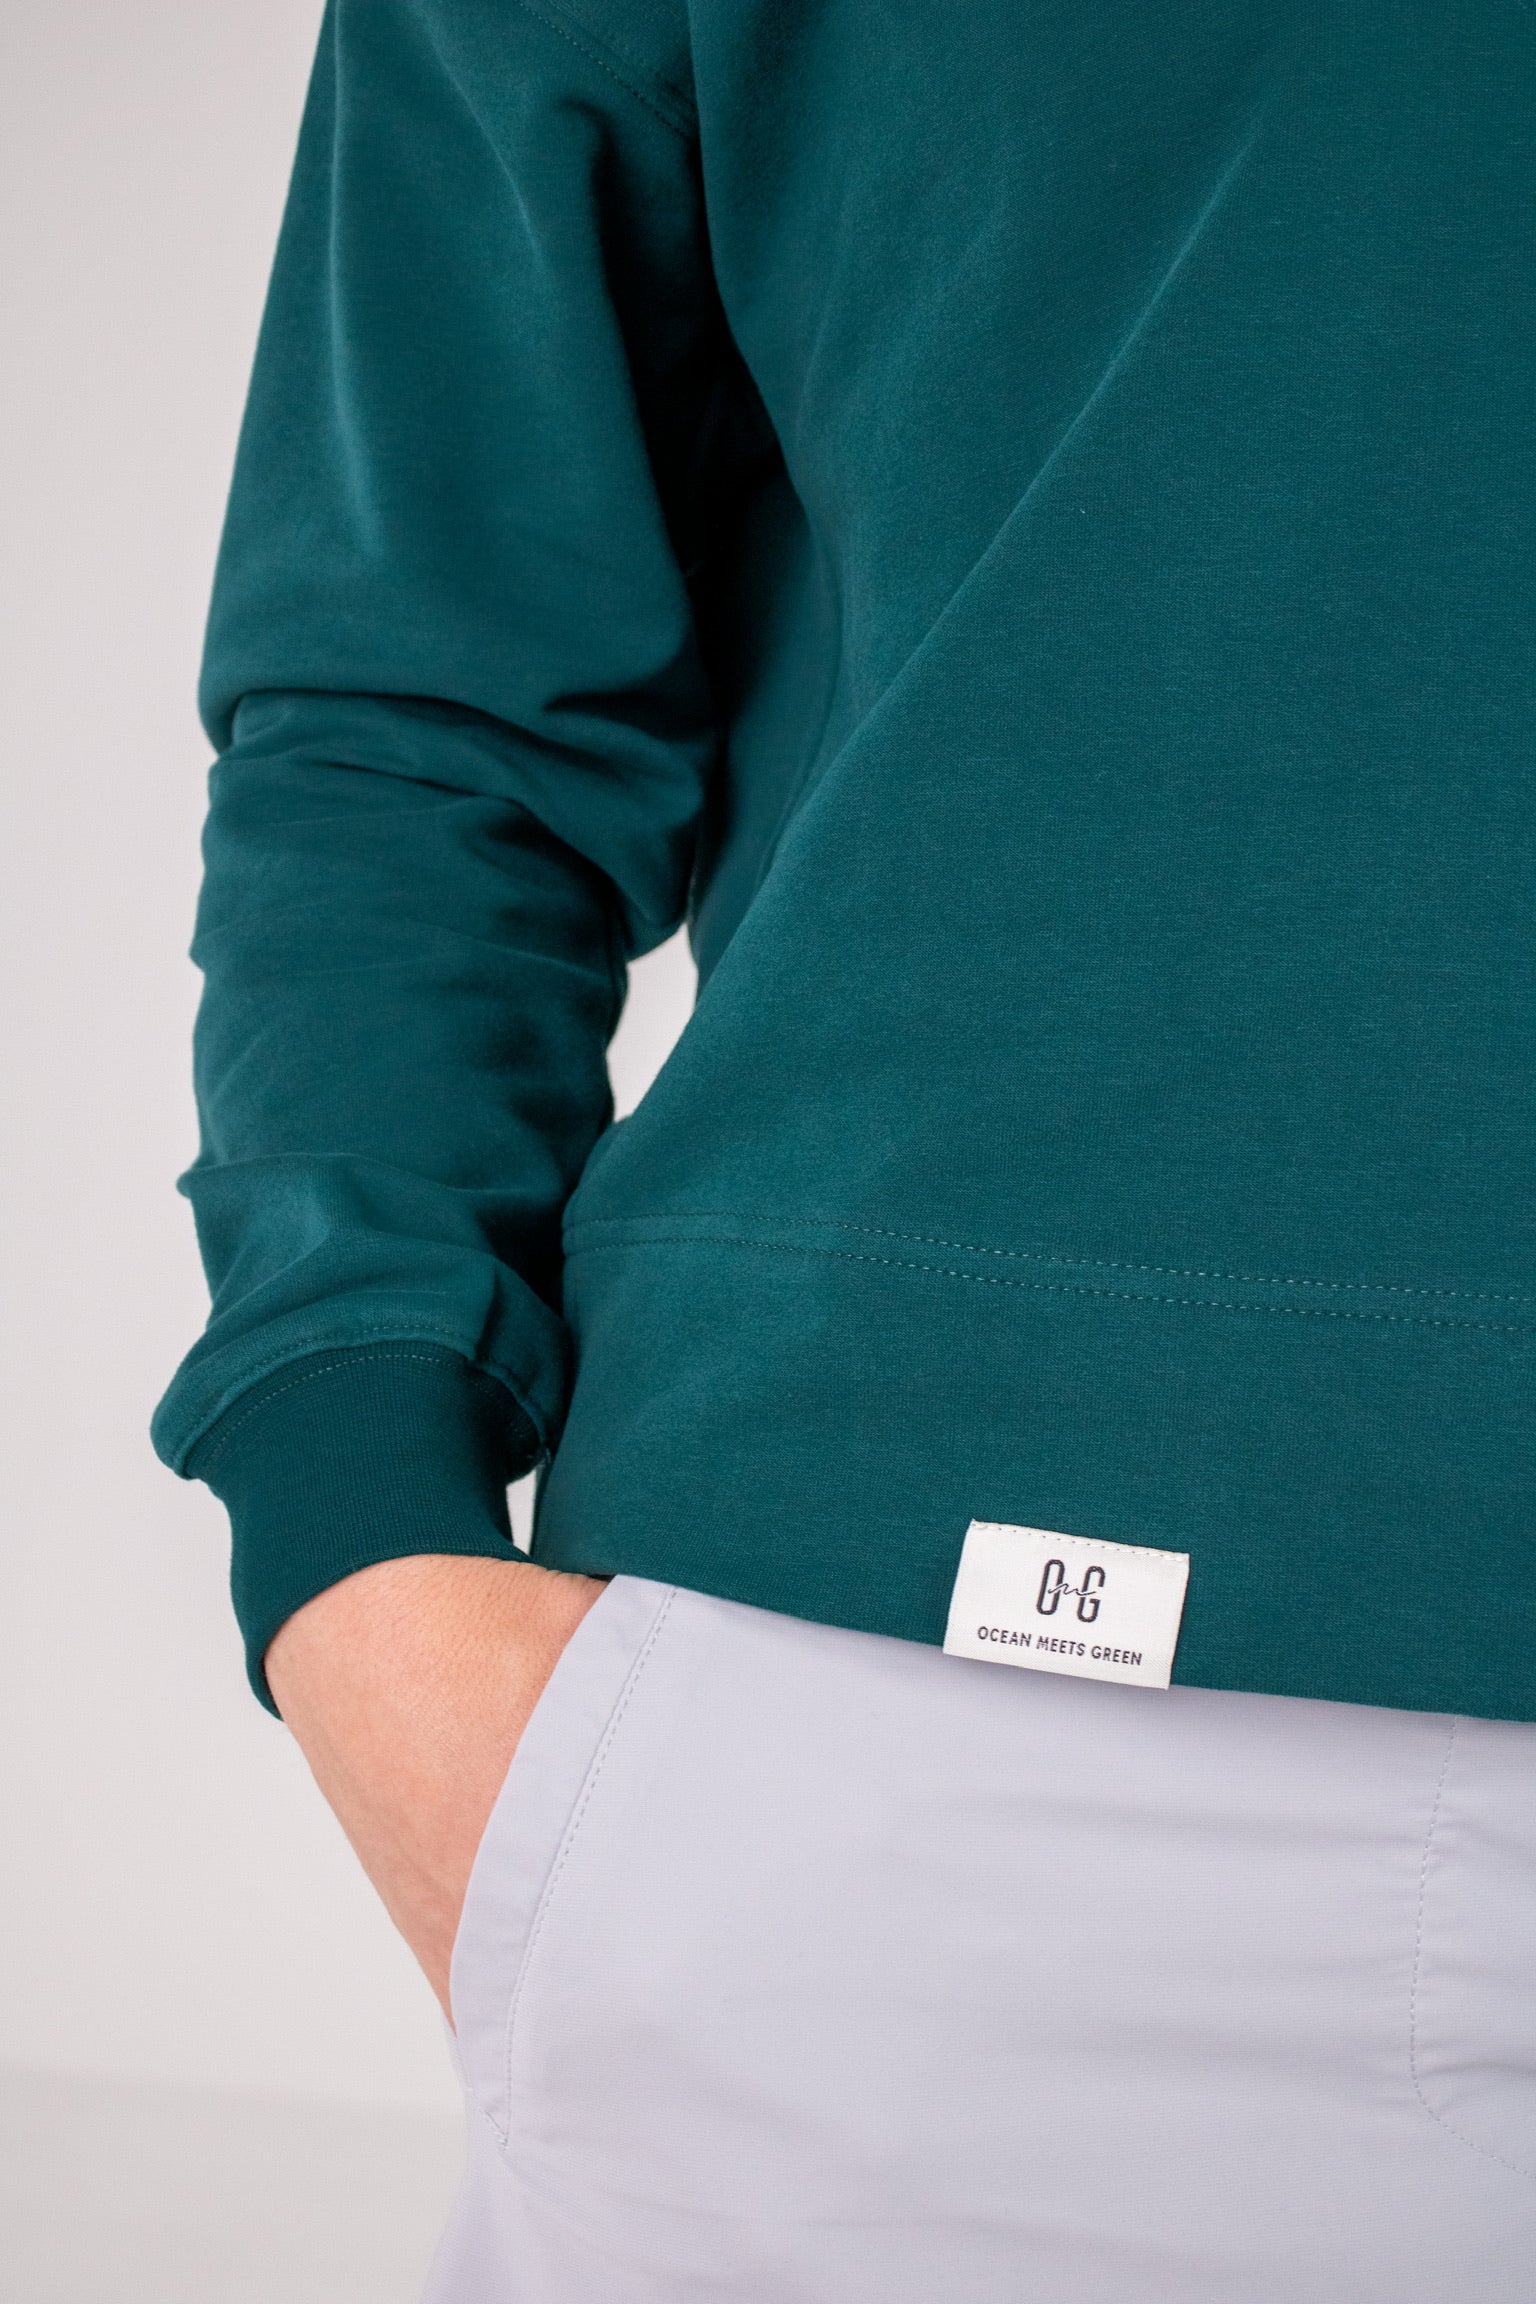 Closeup image of label on Ocean Meets Green women's golf hoodie Flow in pine